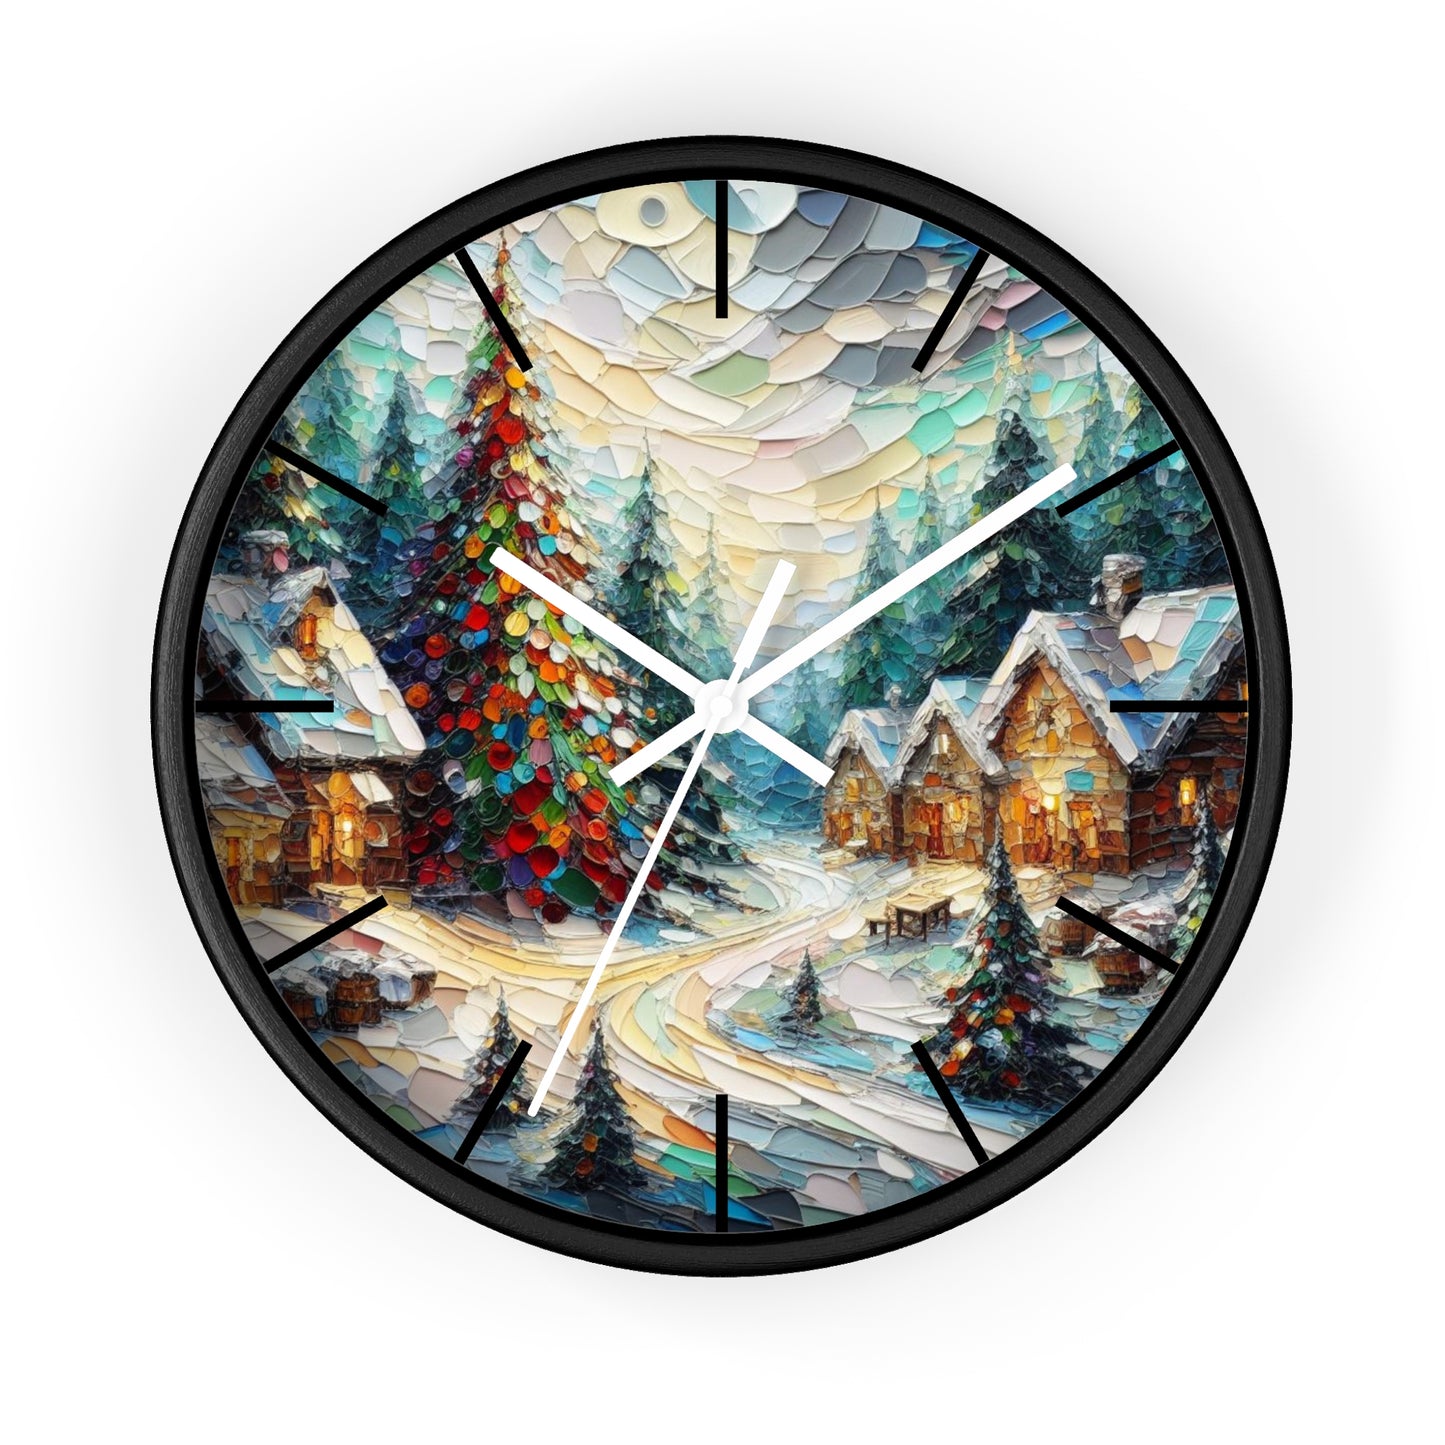 Wall Clock Decor for Christmas - Christmas Village Wall Clock Decor